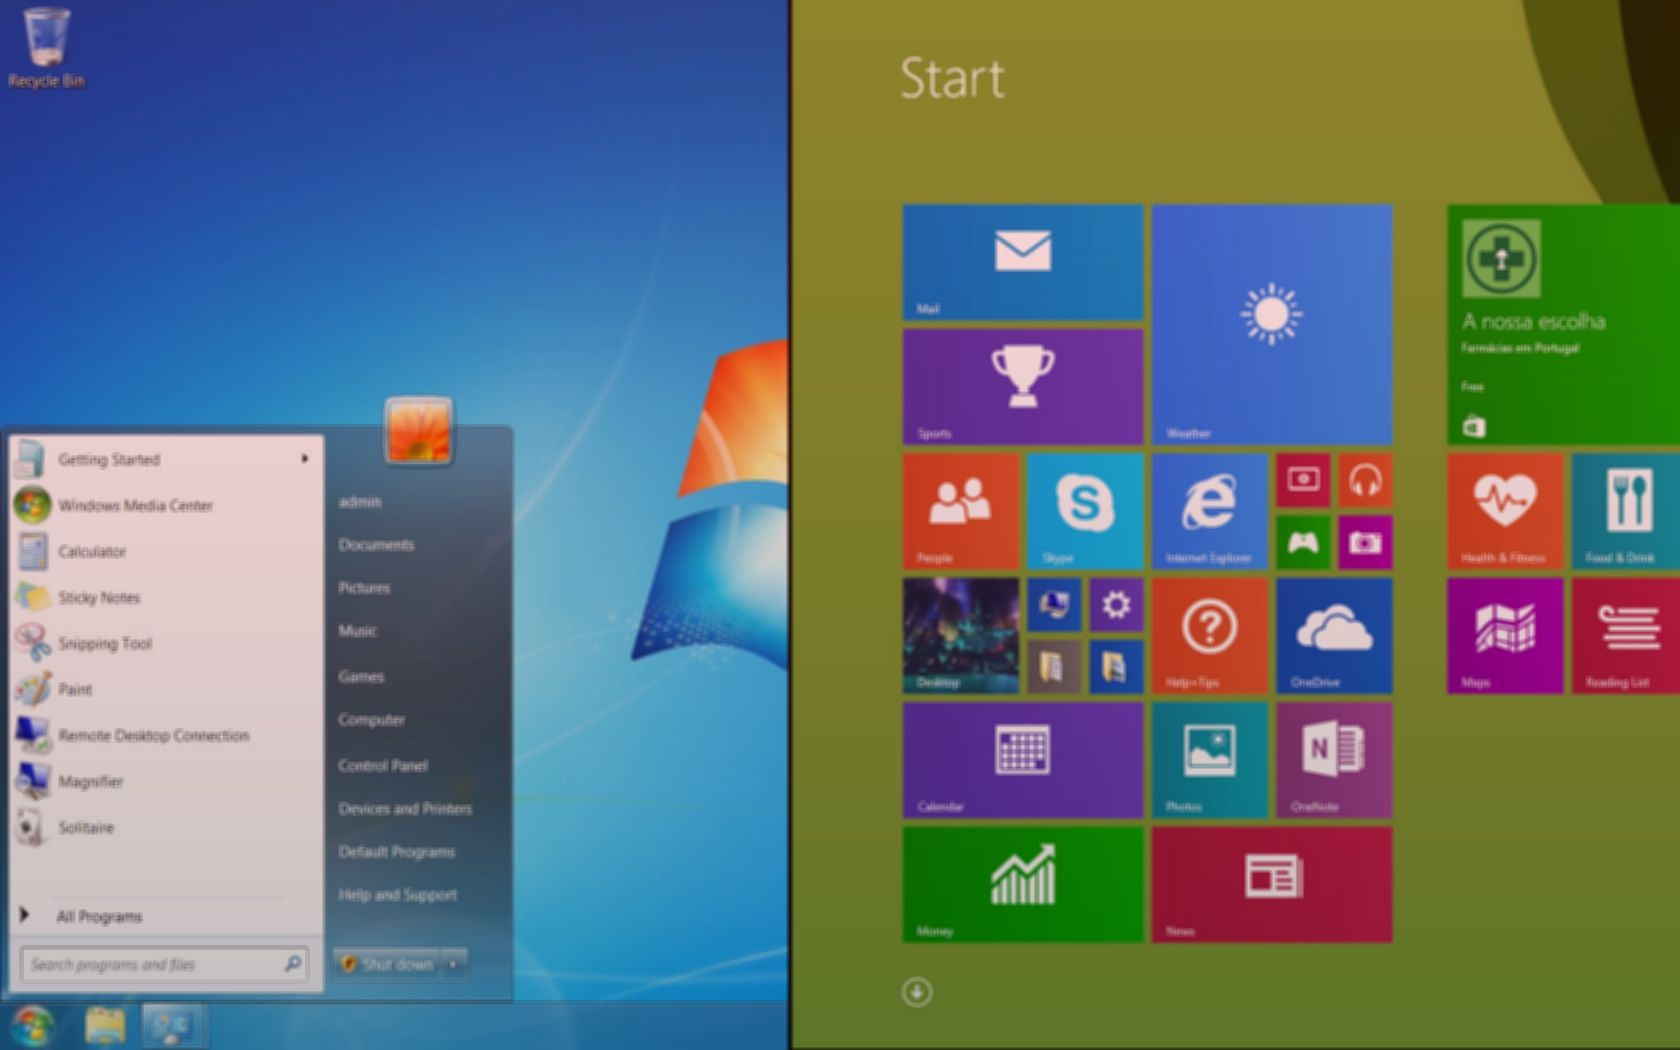 A screenshot of a Windows 7 desktop and Windows 8.1 Start screen side by side